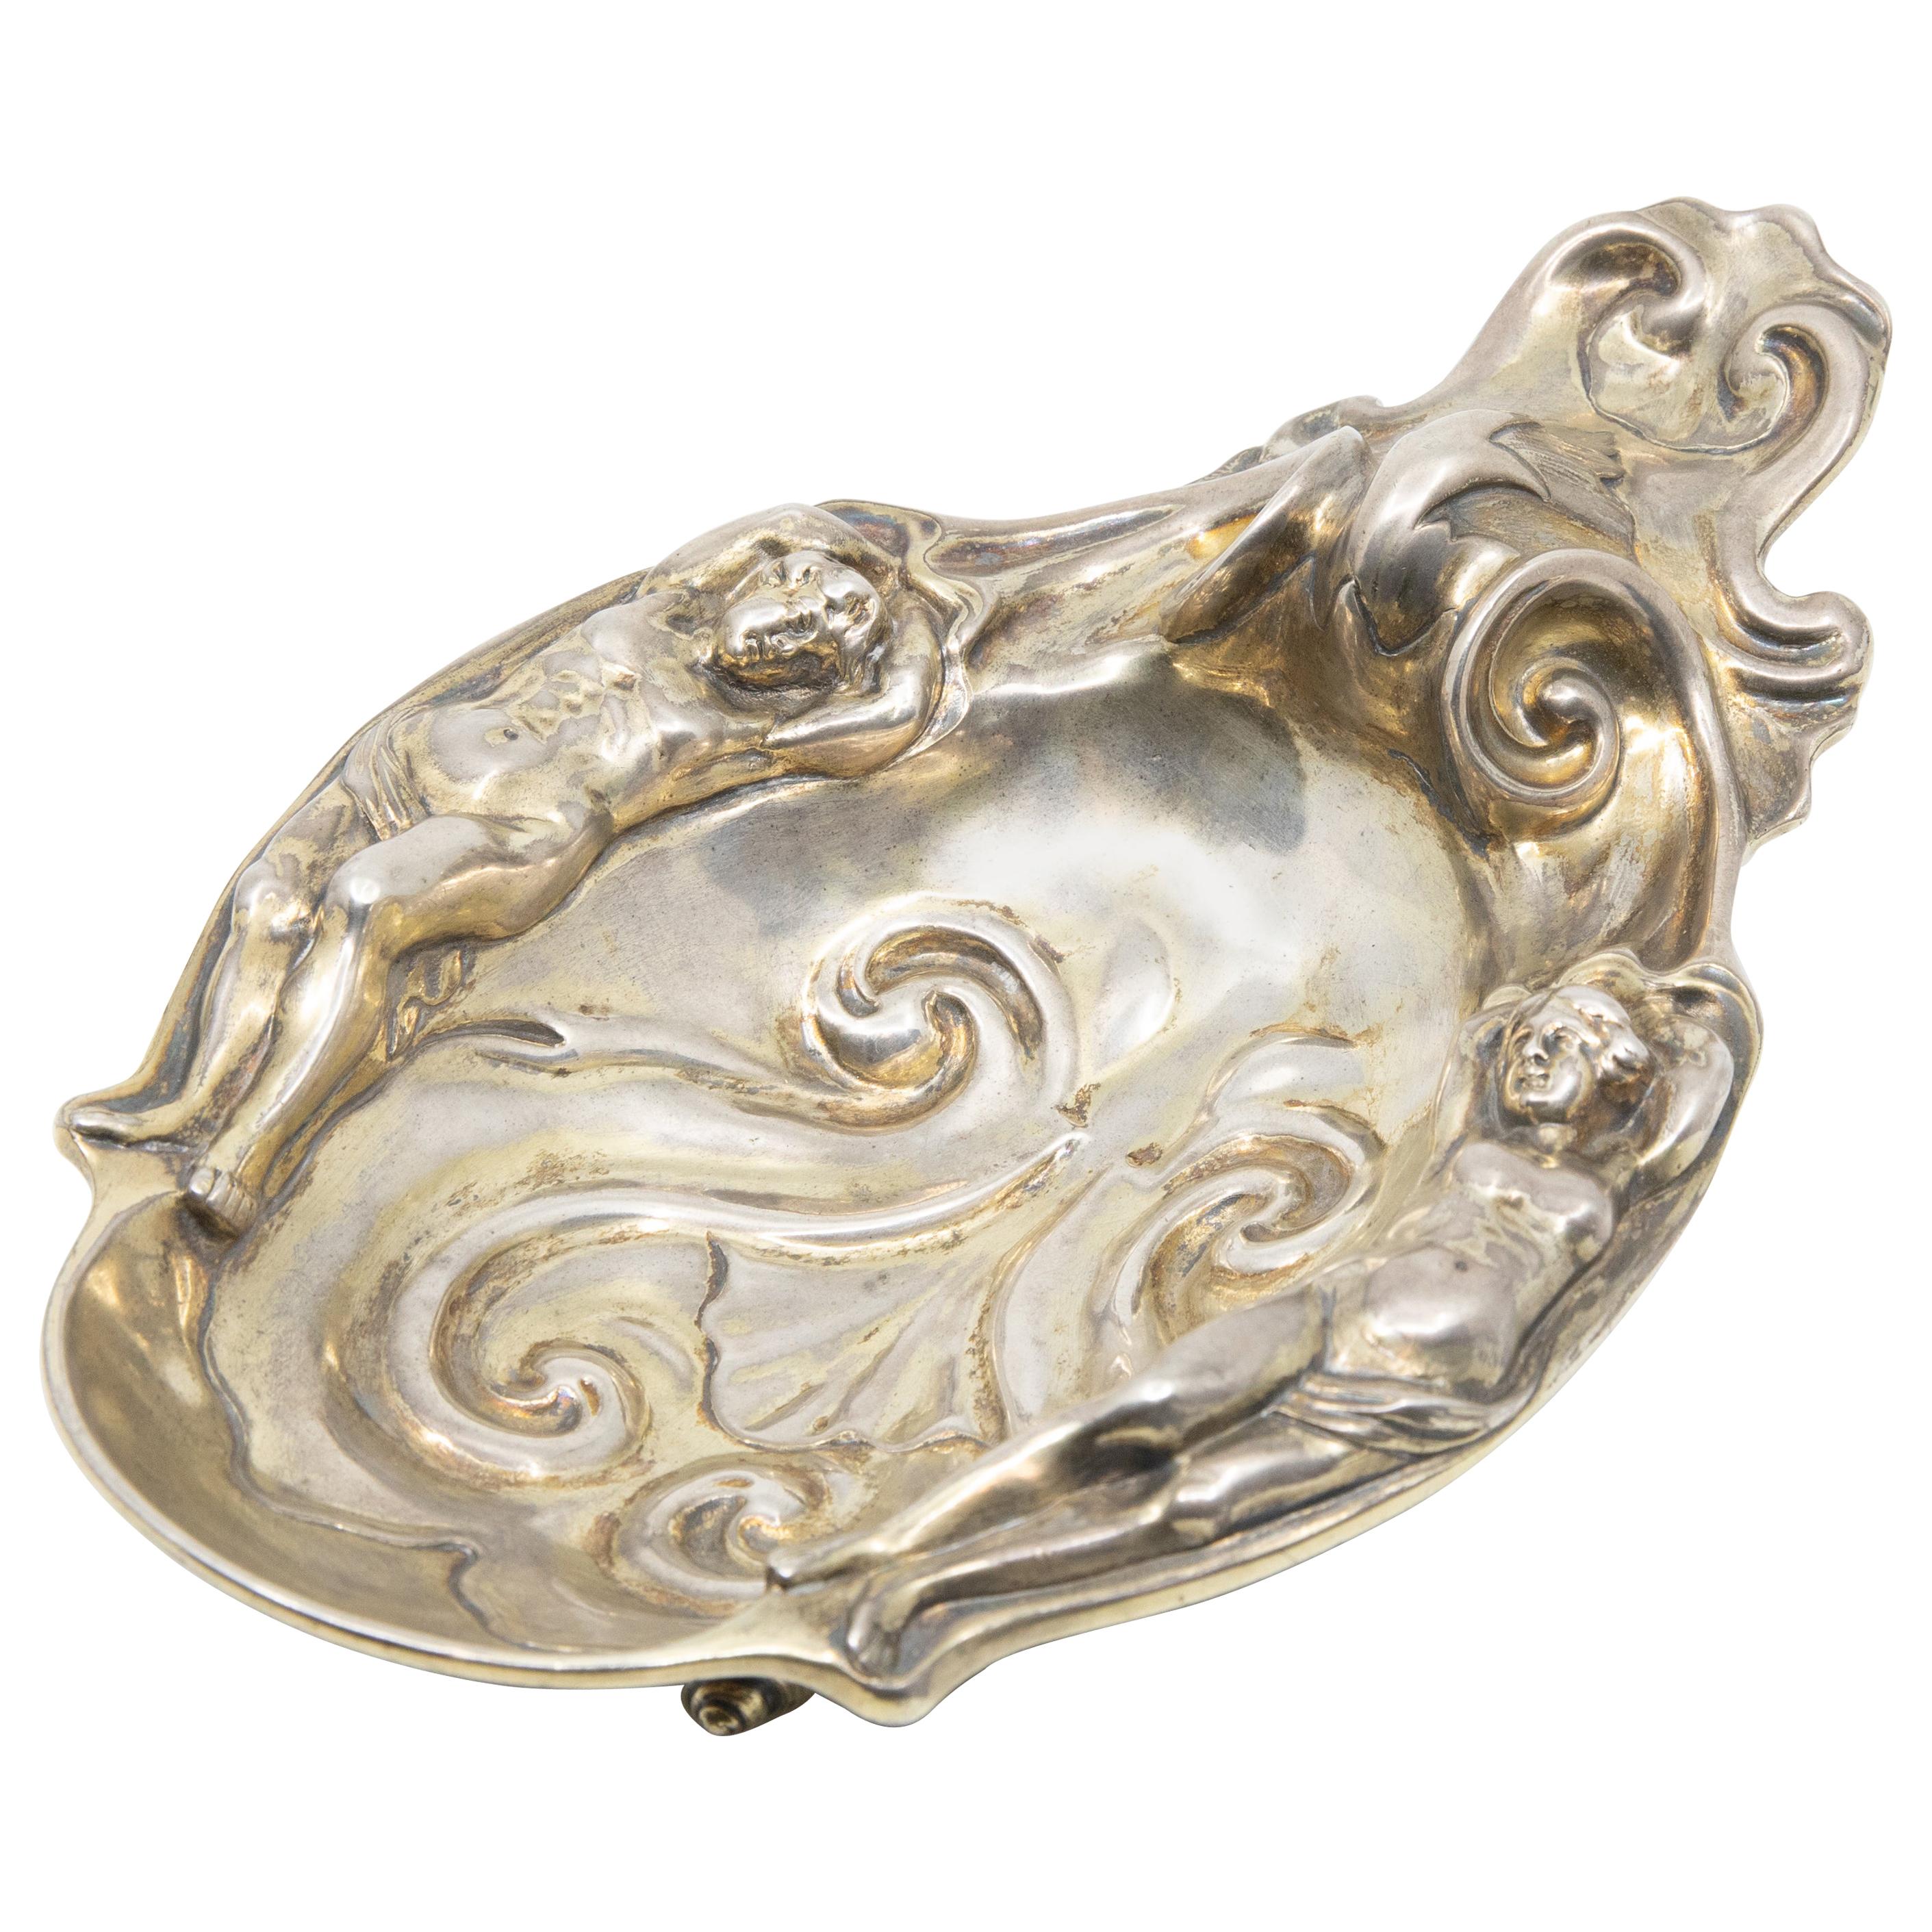 Robert Garrard Figural Renaissance Revival Decorated Sterling Silver Dish